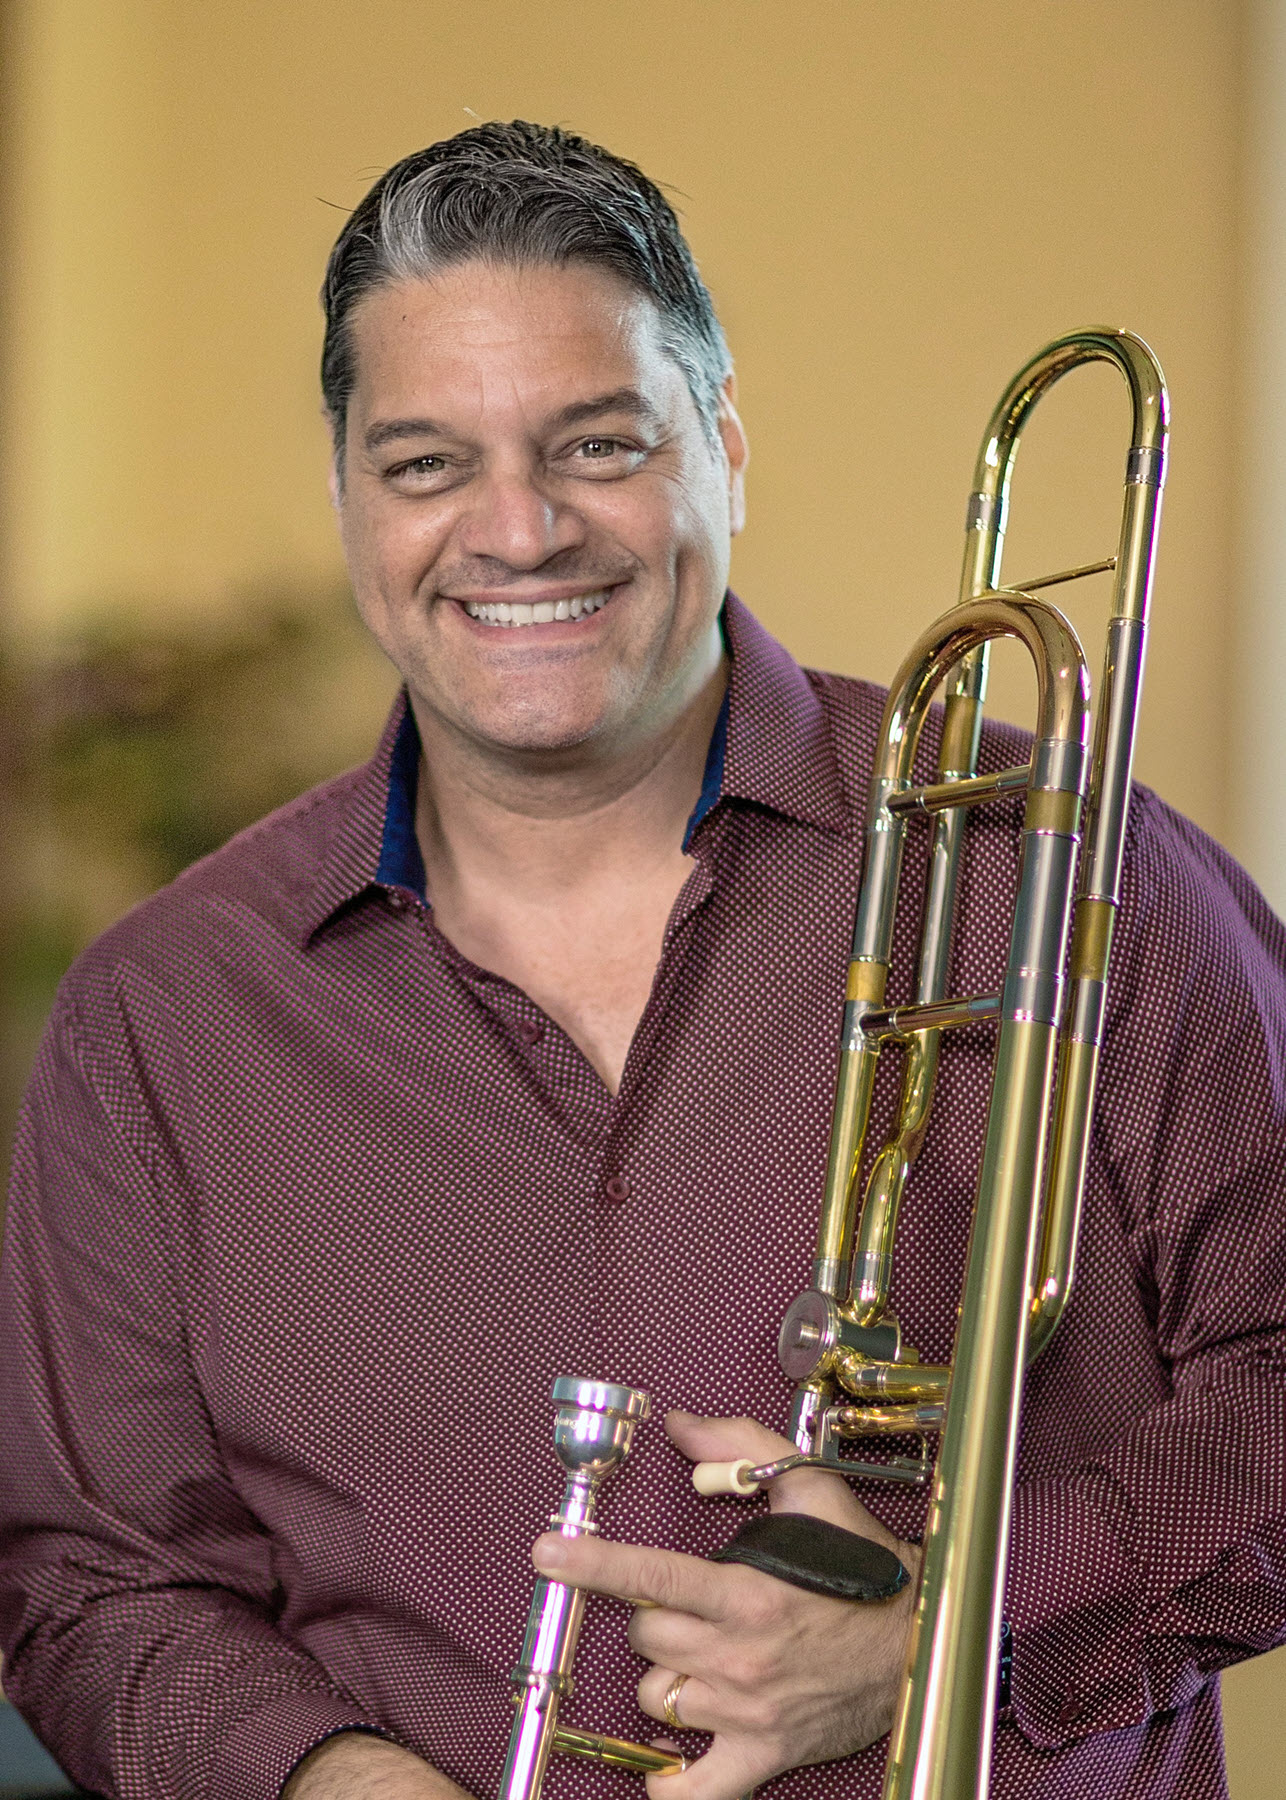 Headshot of smiling man holding a trombone.